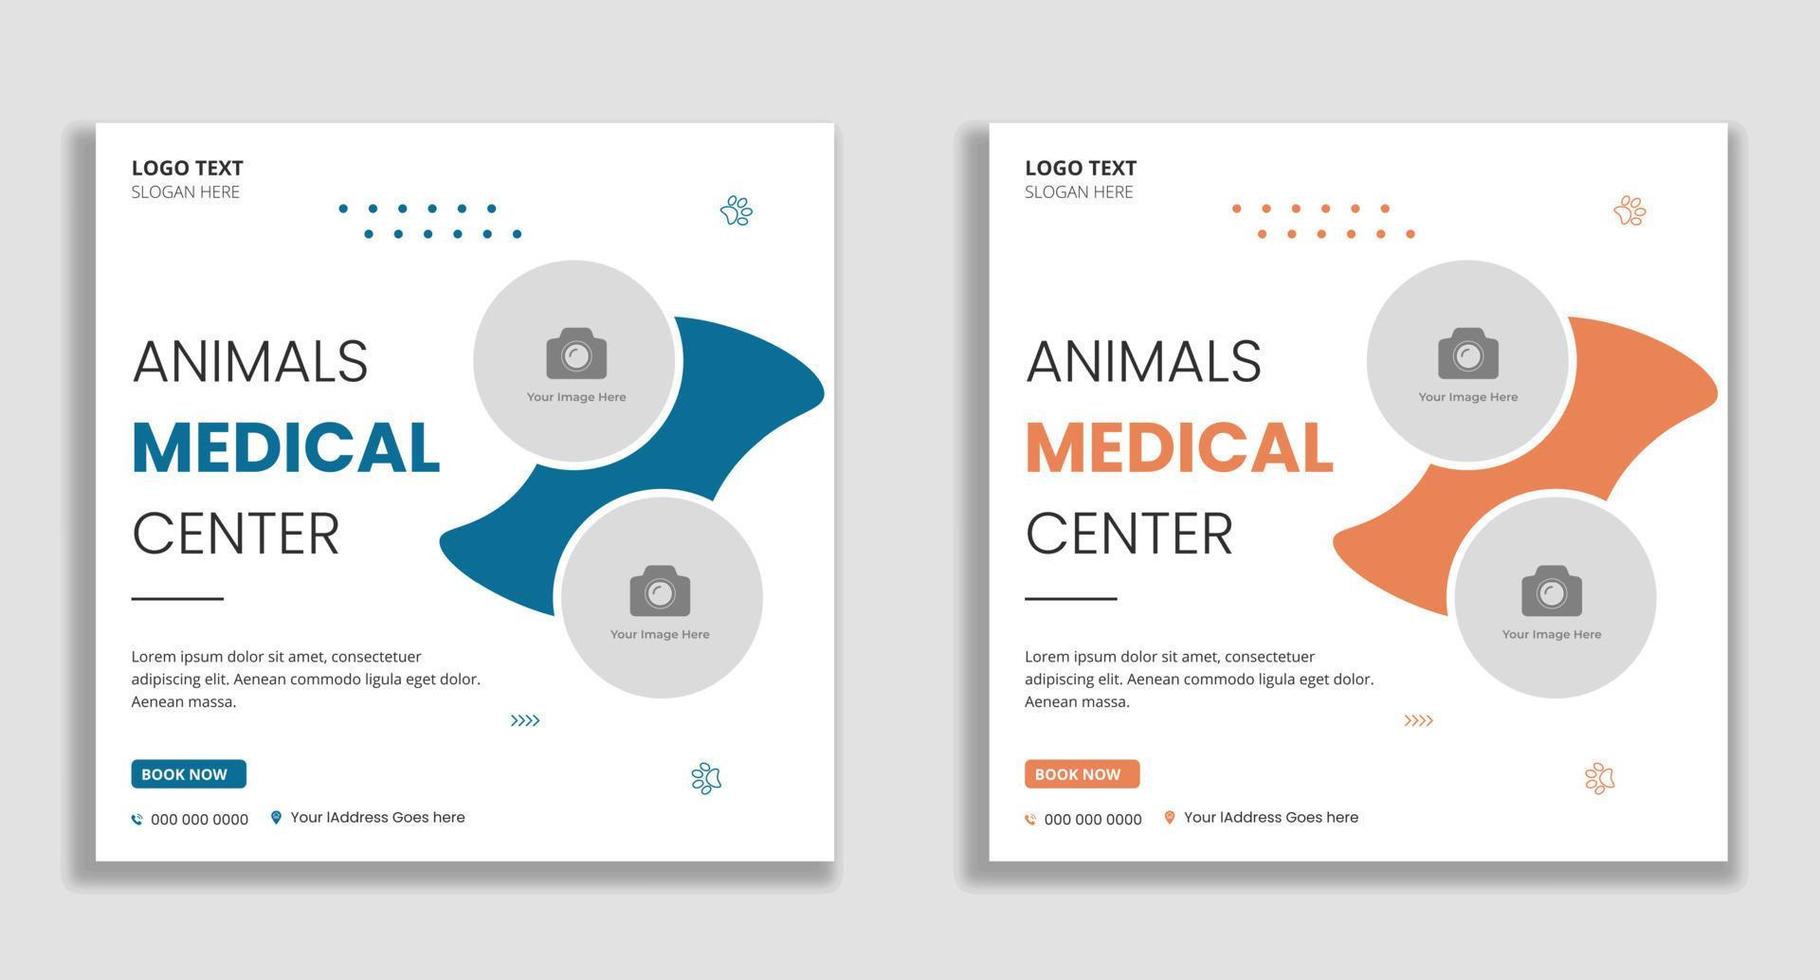 Animal medical center social media post and web banner vector